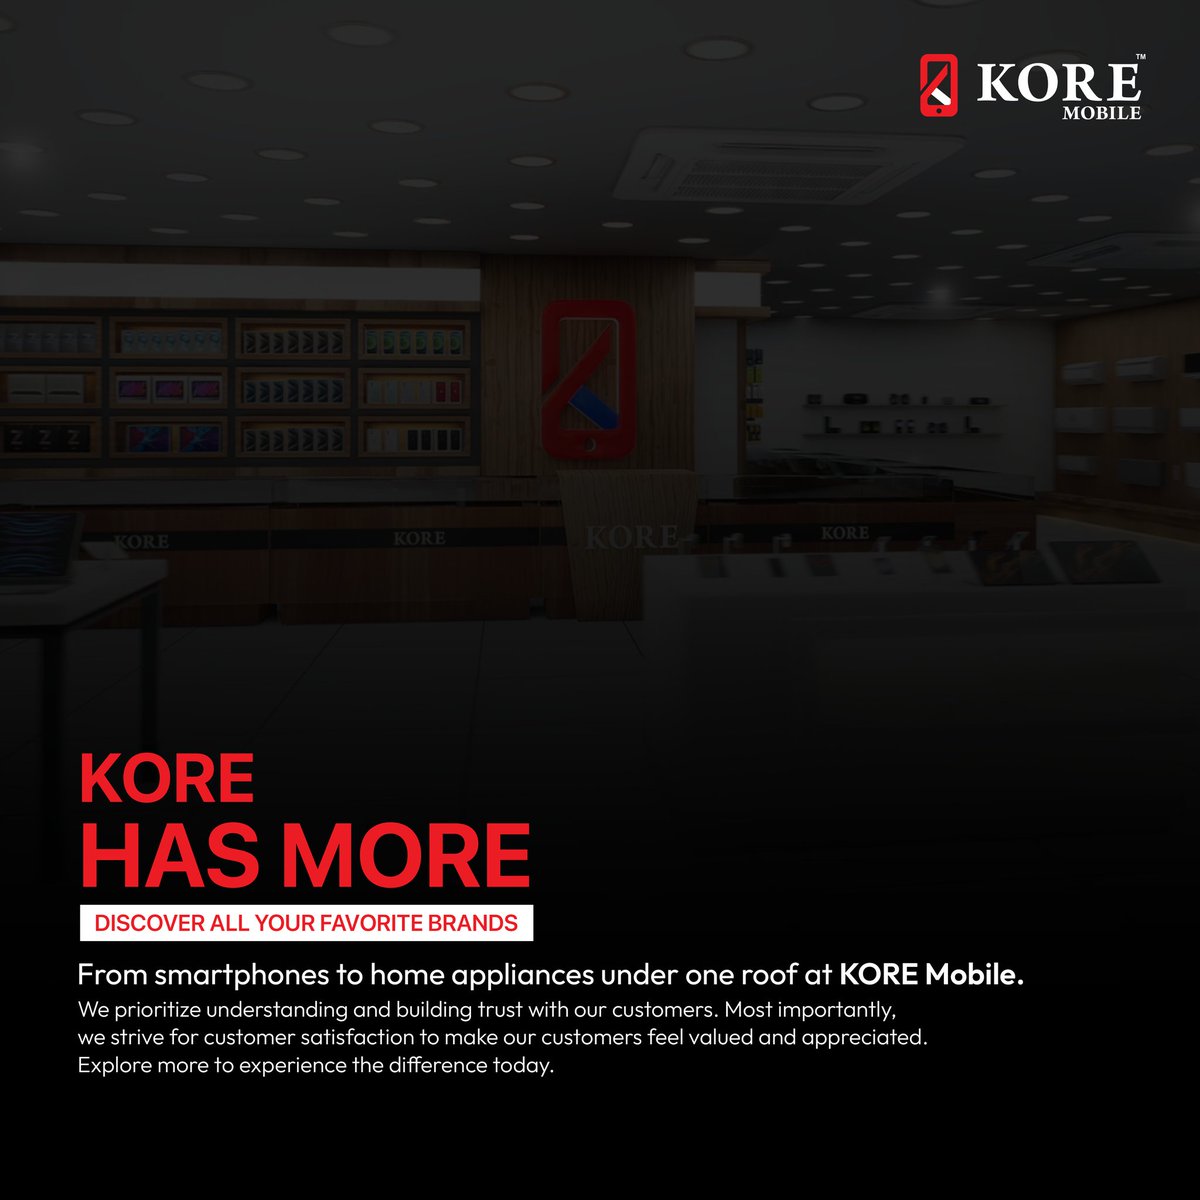 Tech paradise awaits at KORE Mobiles! 🌟 Because #KoreHasMore. Visit Kore Mobile Store to experience the difference today. 

 #KoreMobileIndia #SmartShopping #KoreHasMore #TrustworthyRetail #SatisfyingExperience